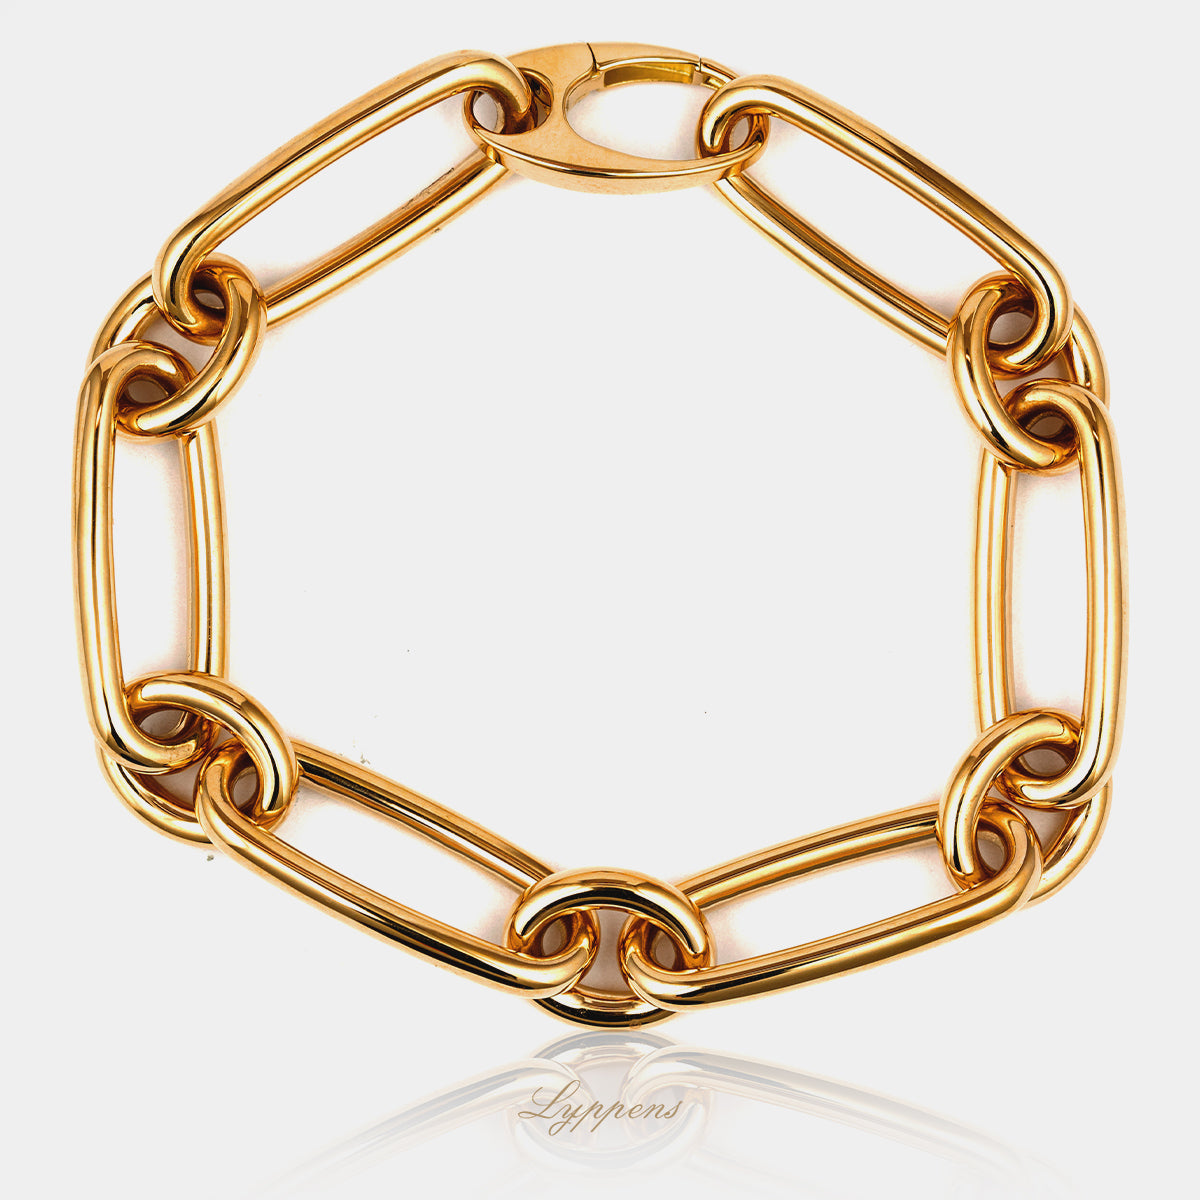 Yellow gold fantasy link bracelet